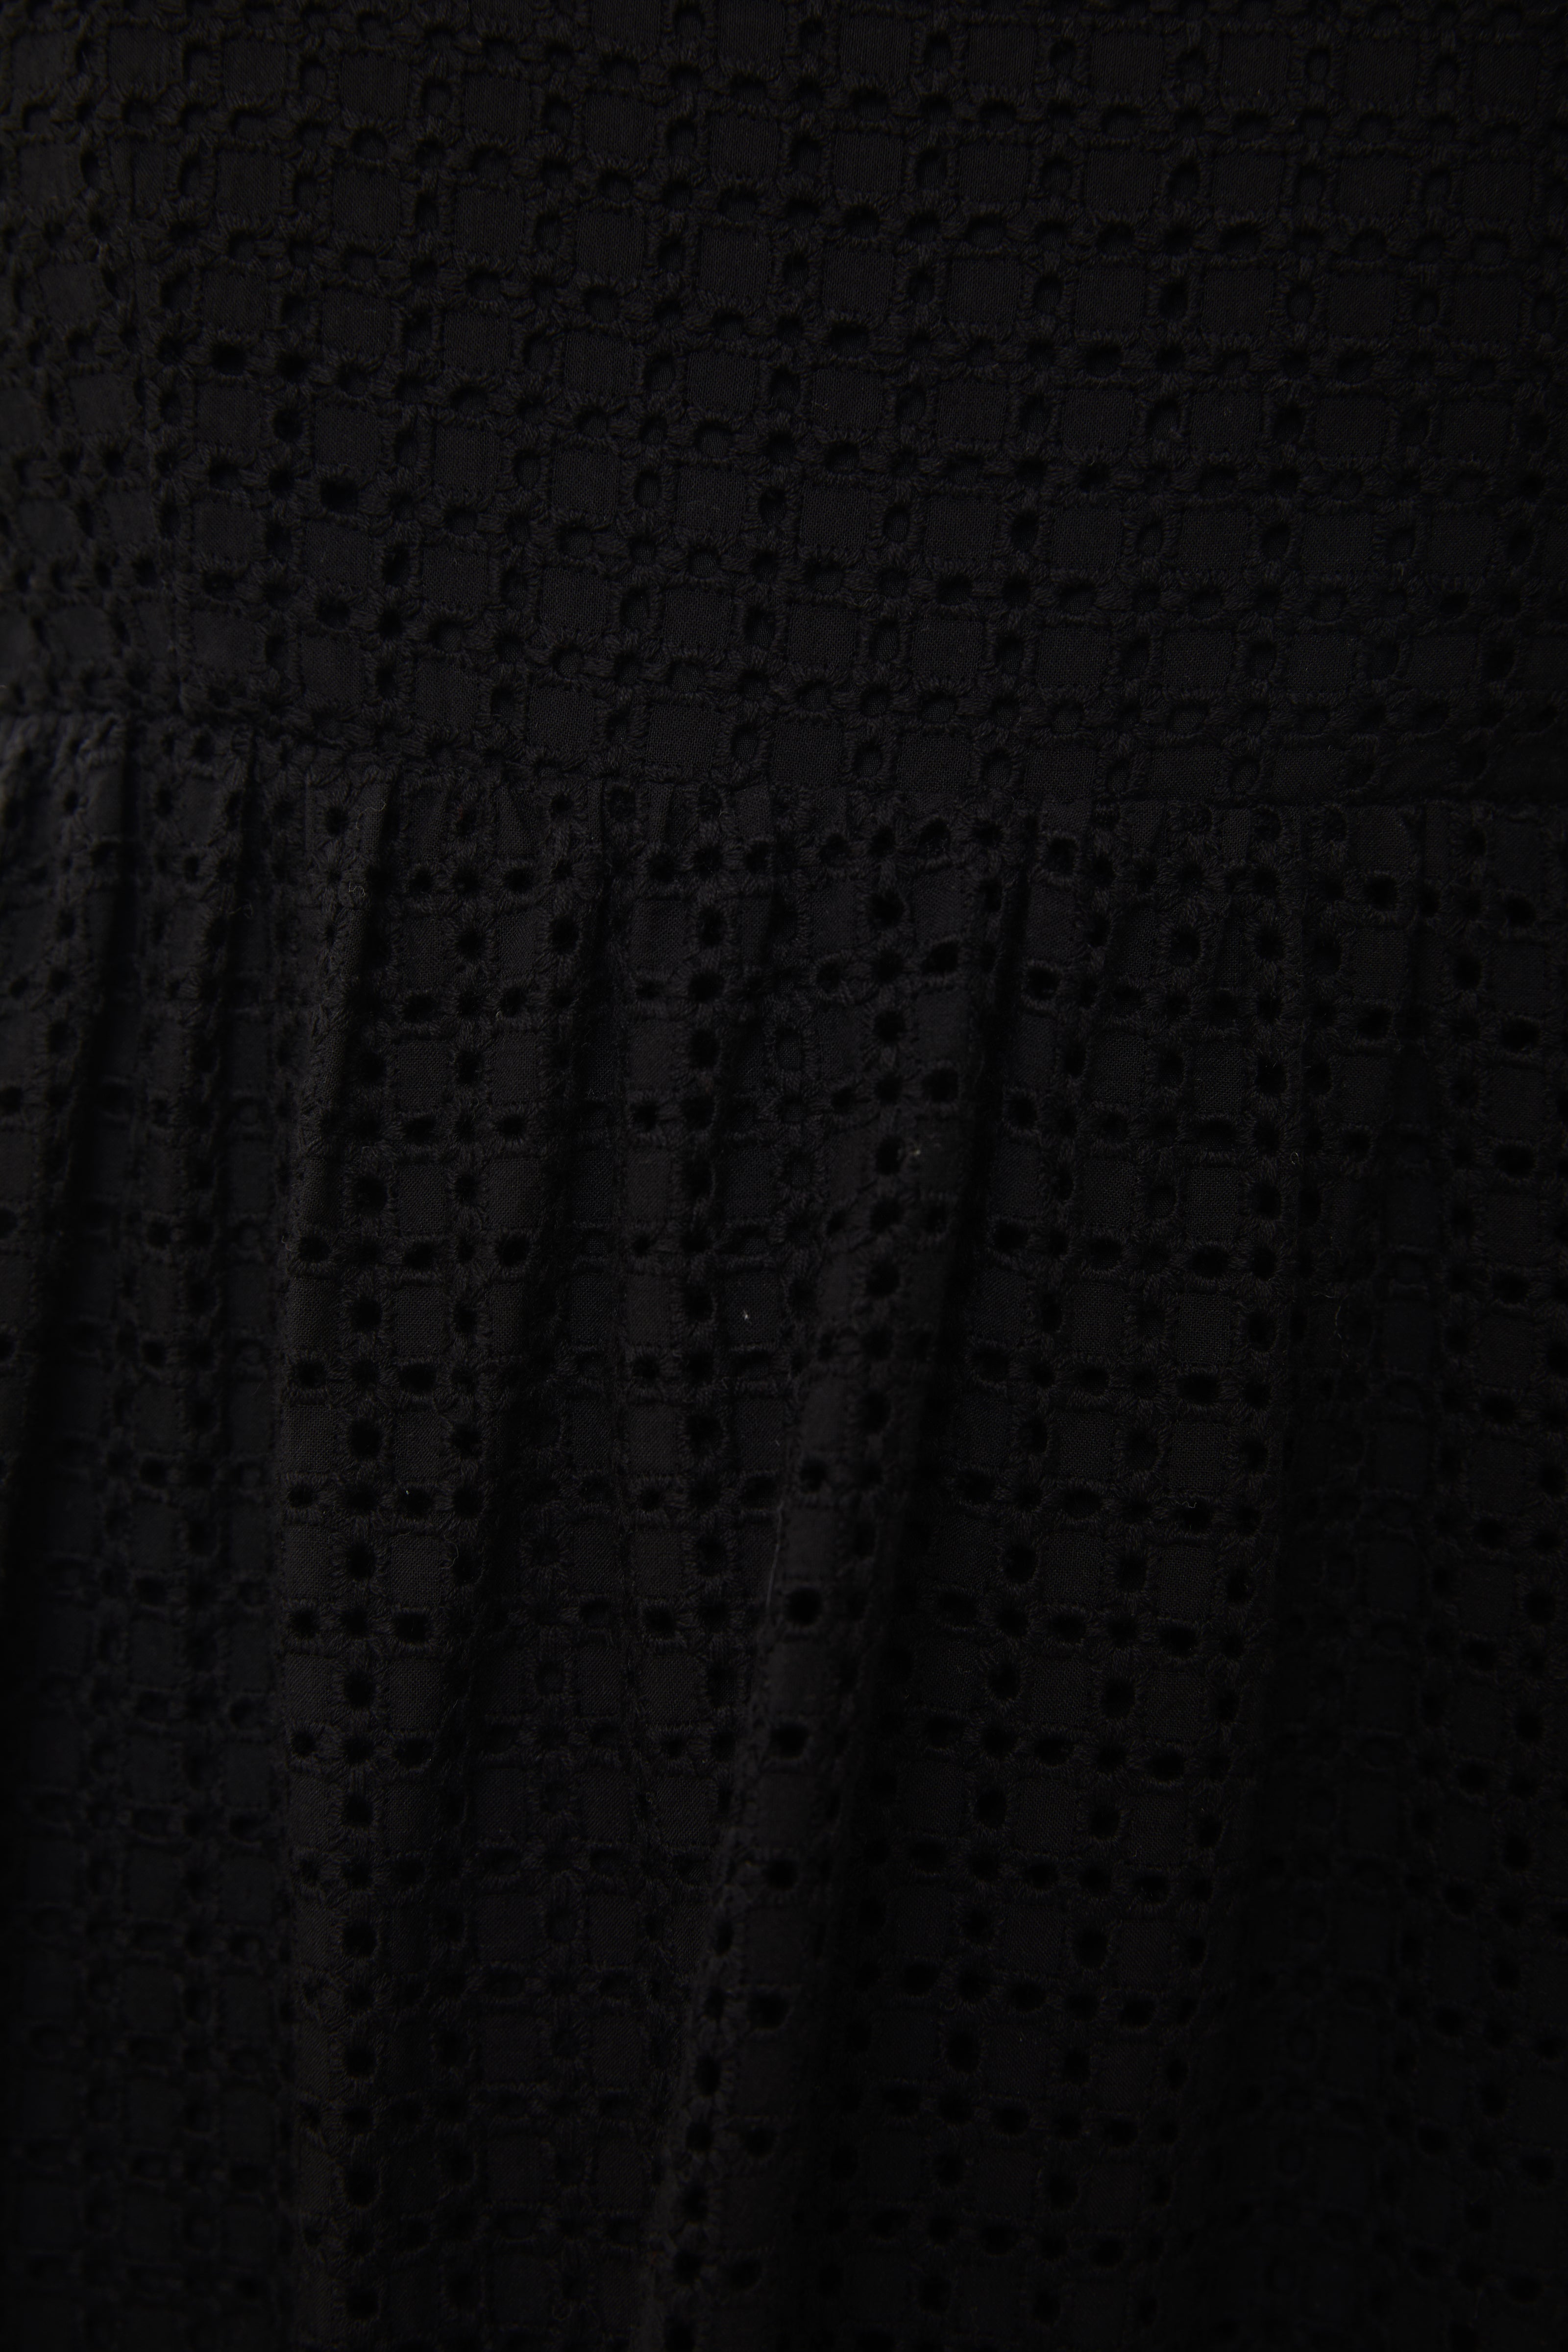 Maha Crochet Cami Midi Dress in Black